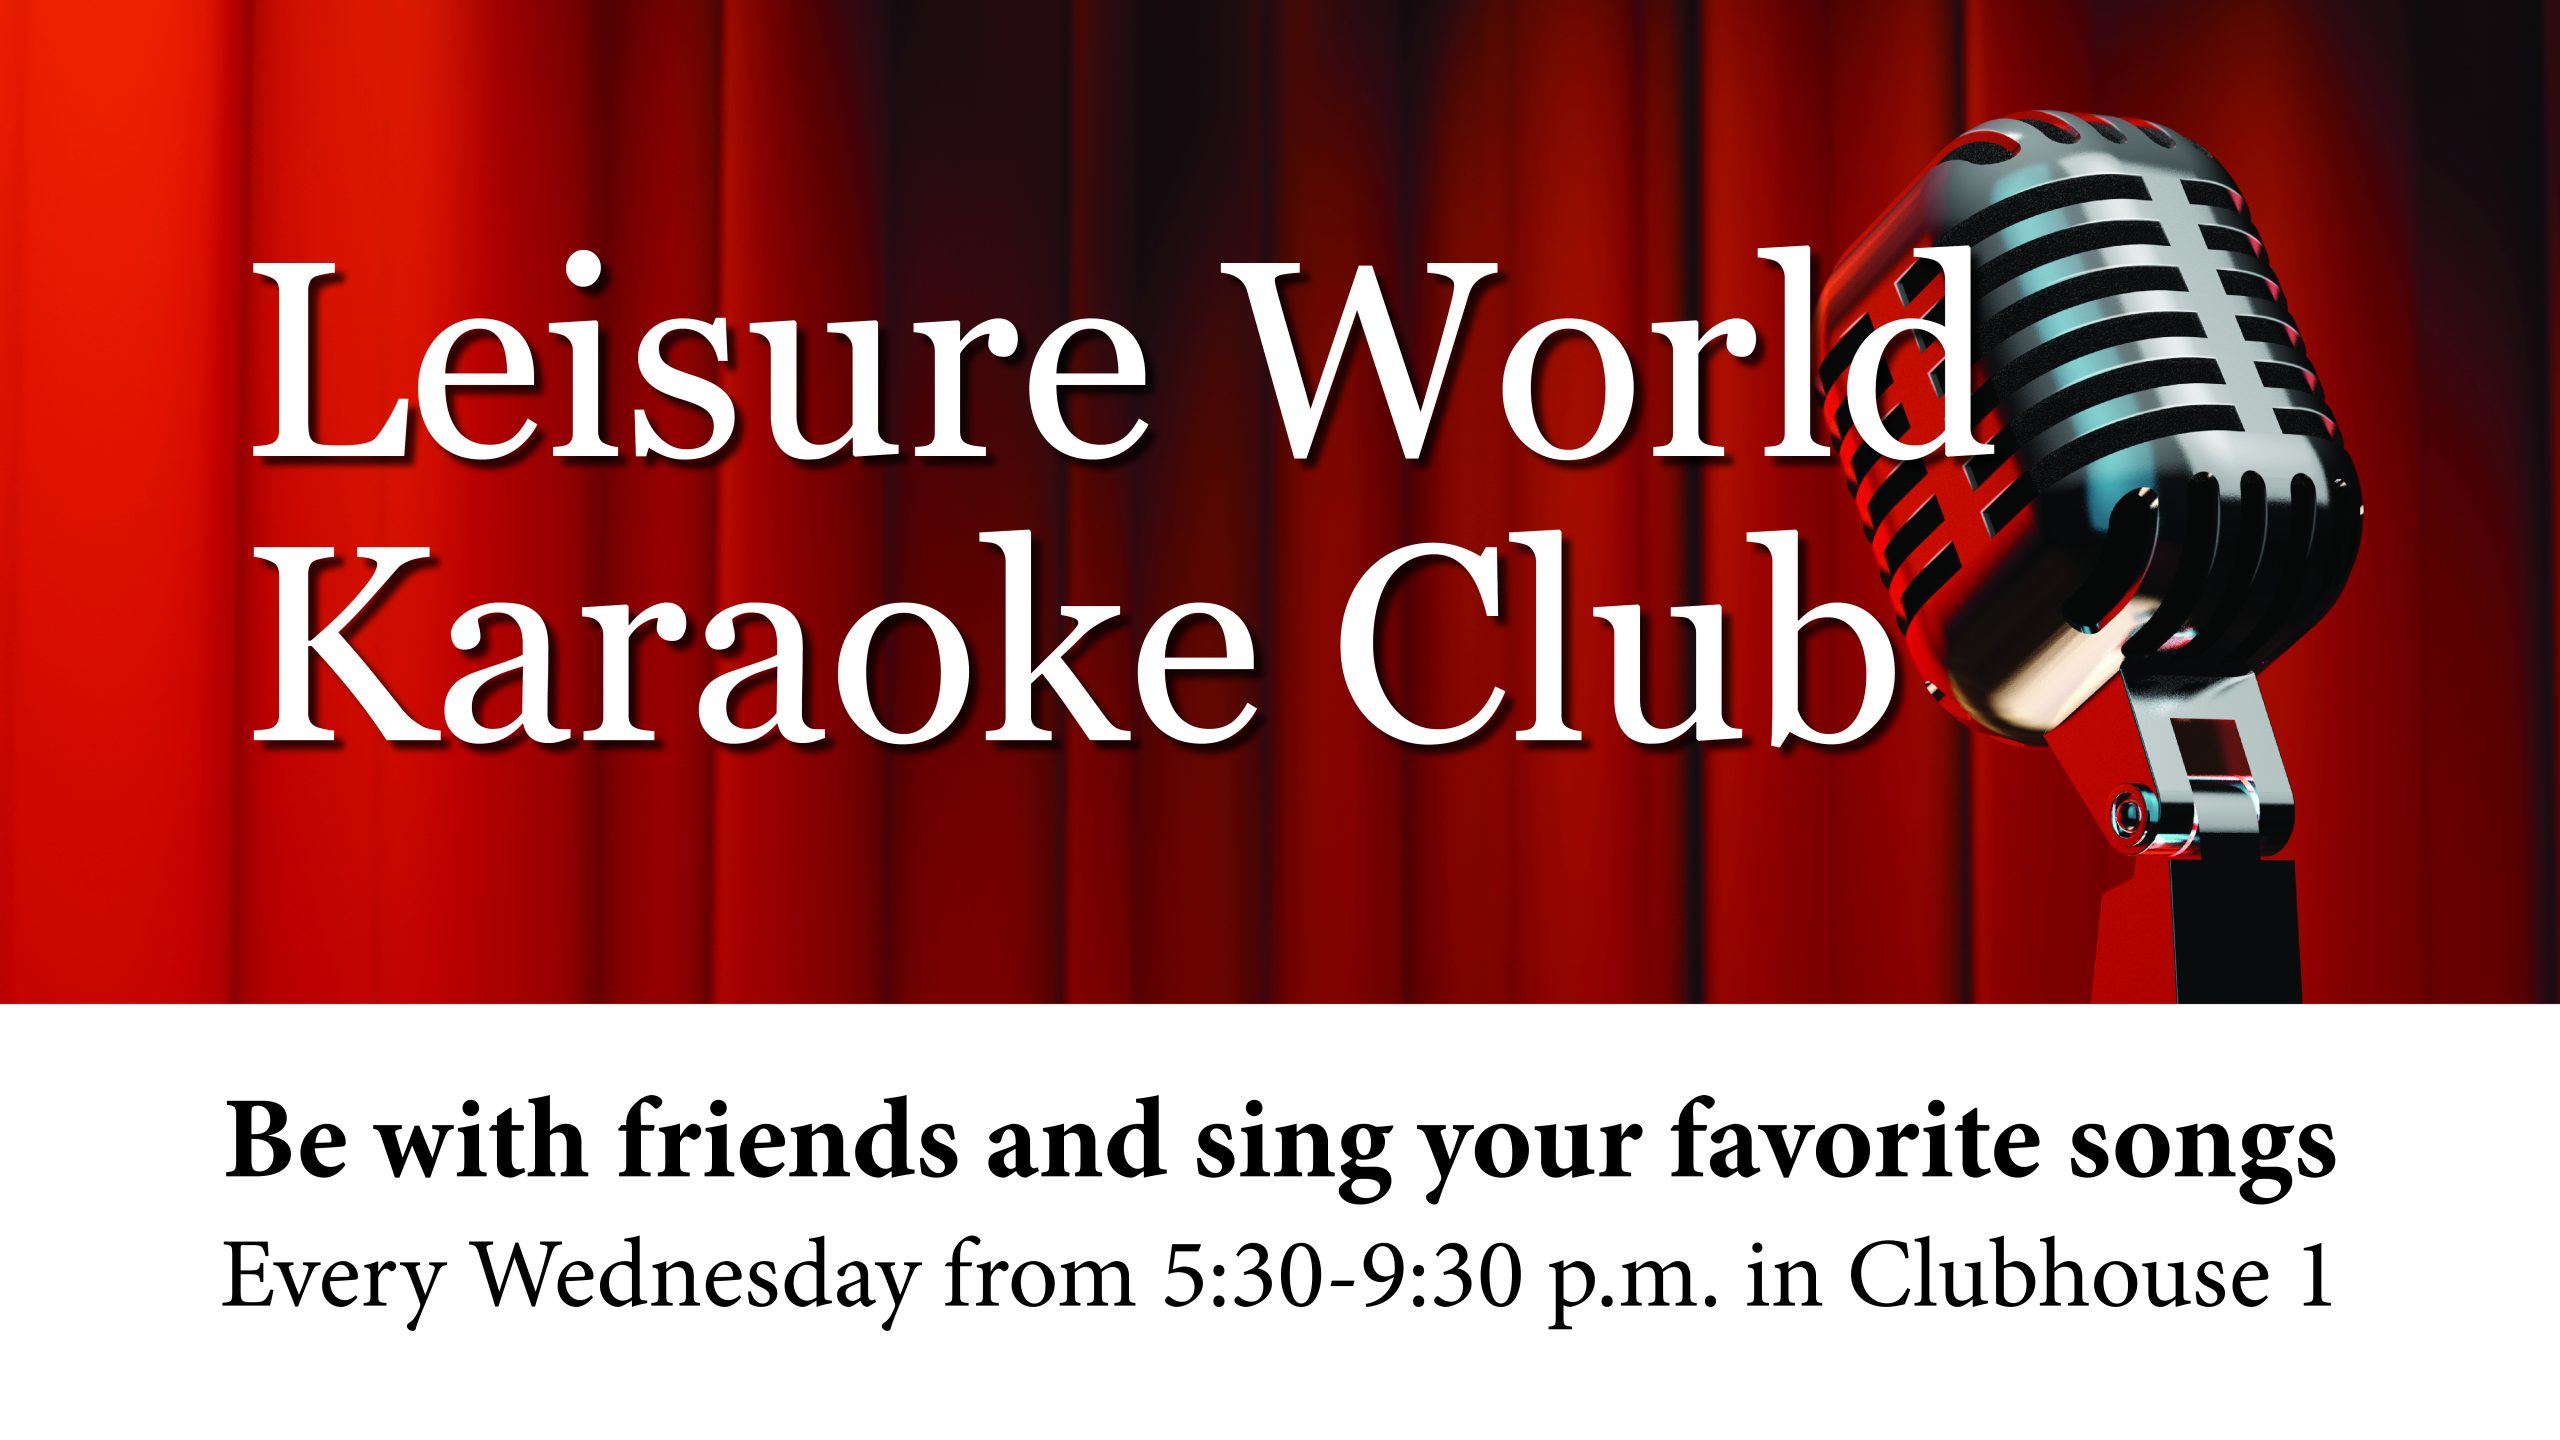 LW Karaoke Club